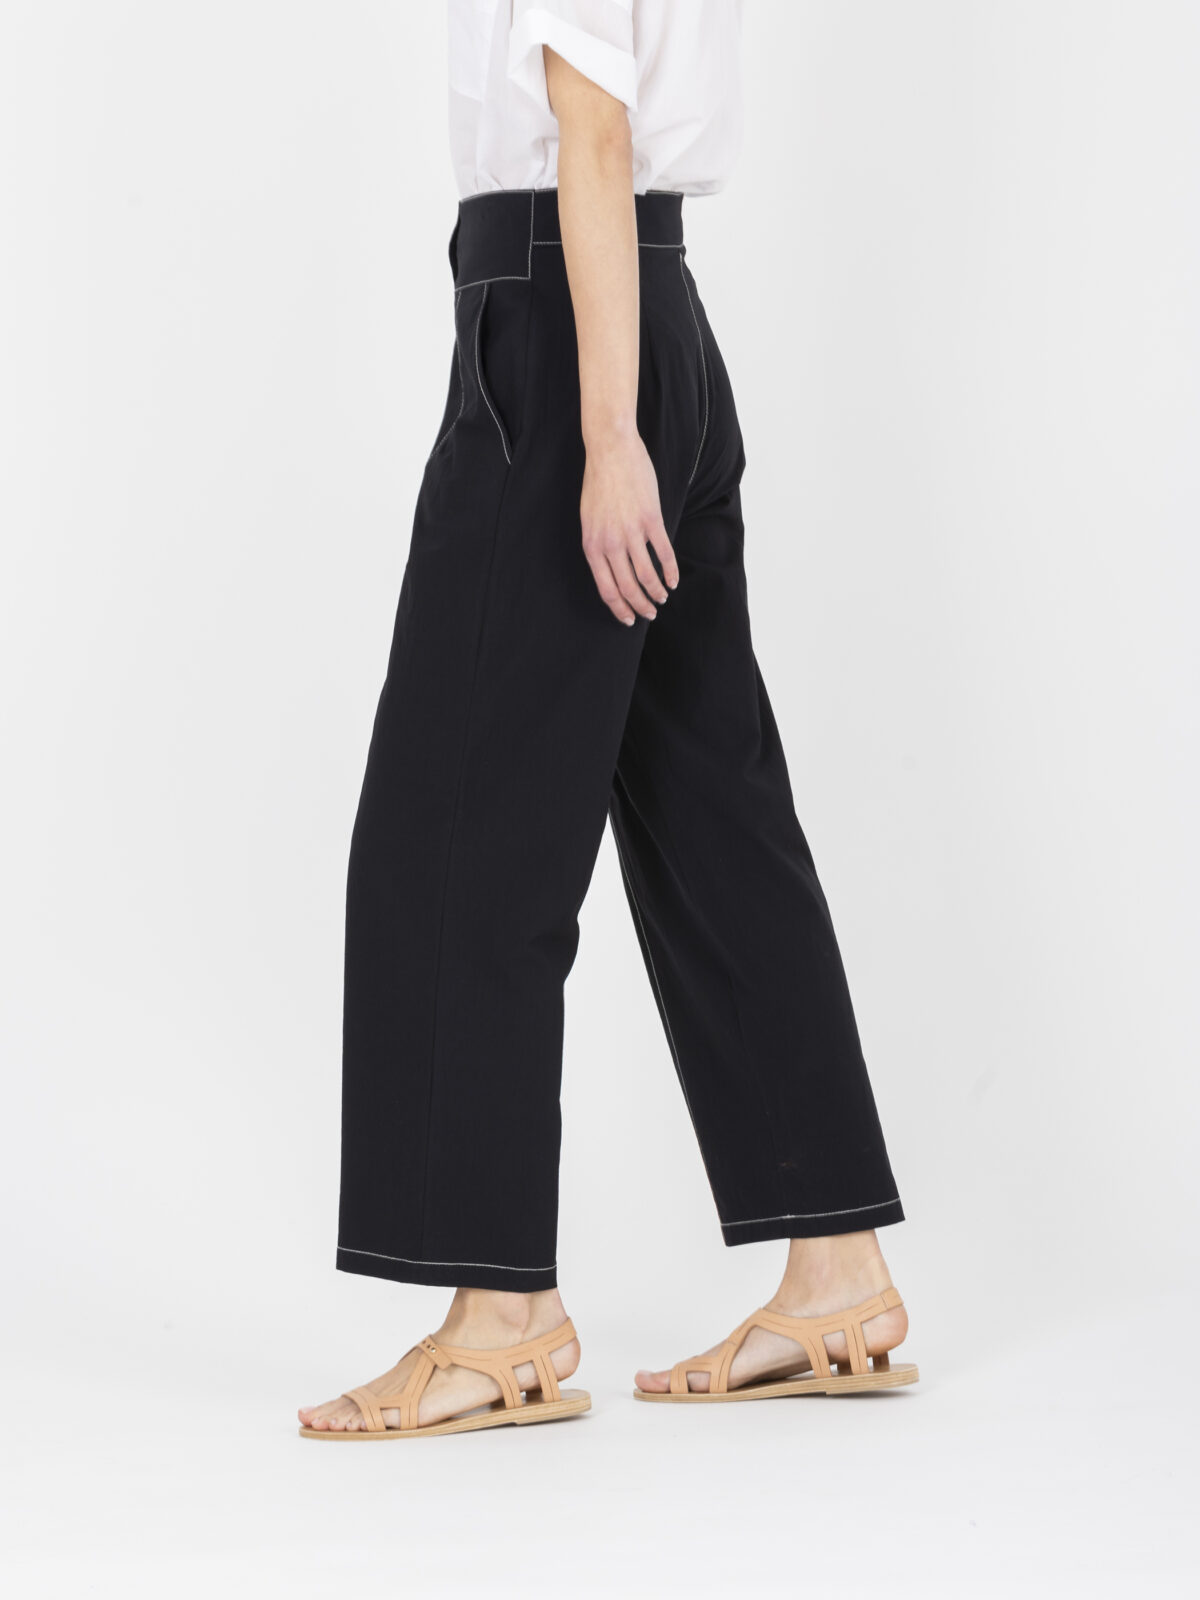 Lupi-black-cotton-pants-high-waisted-topstitching-greek-designers-limited-collection-uniforme-athens-matchboxathens